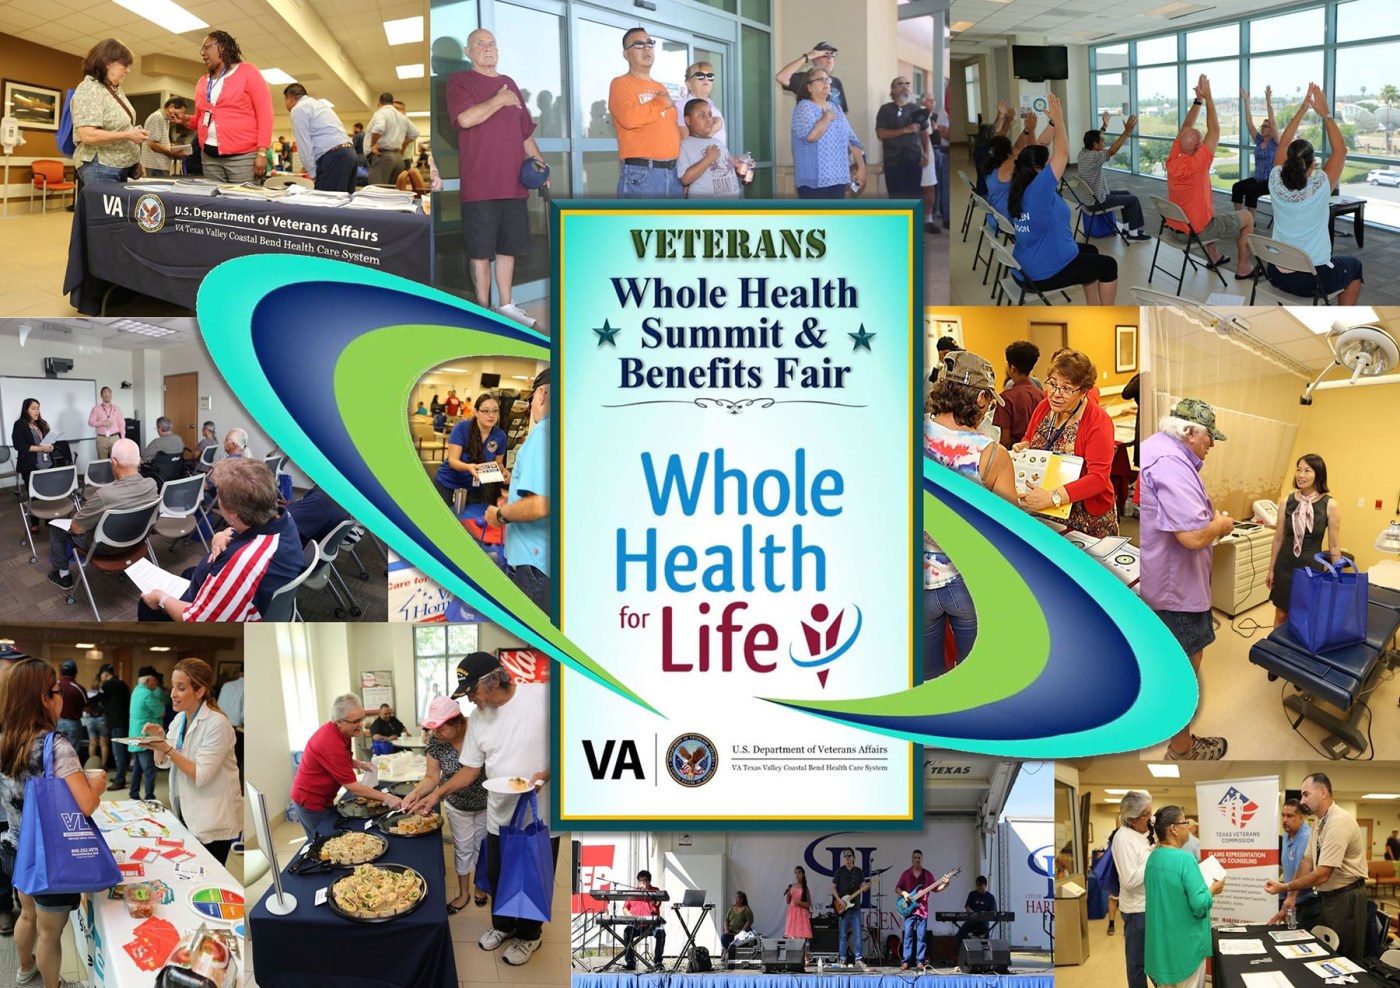 Texas VA hosts first ever Veterans Whole Health Summit & Benefits Fair